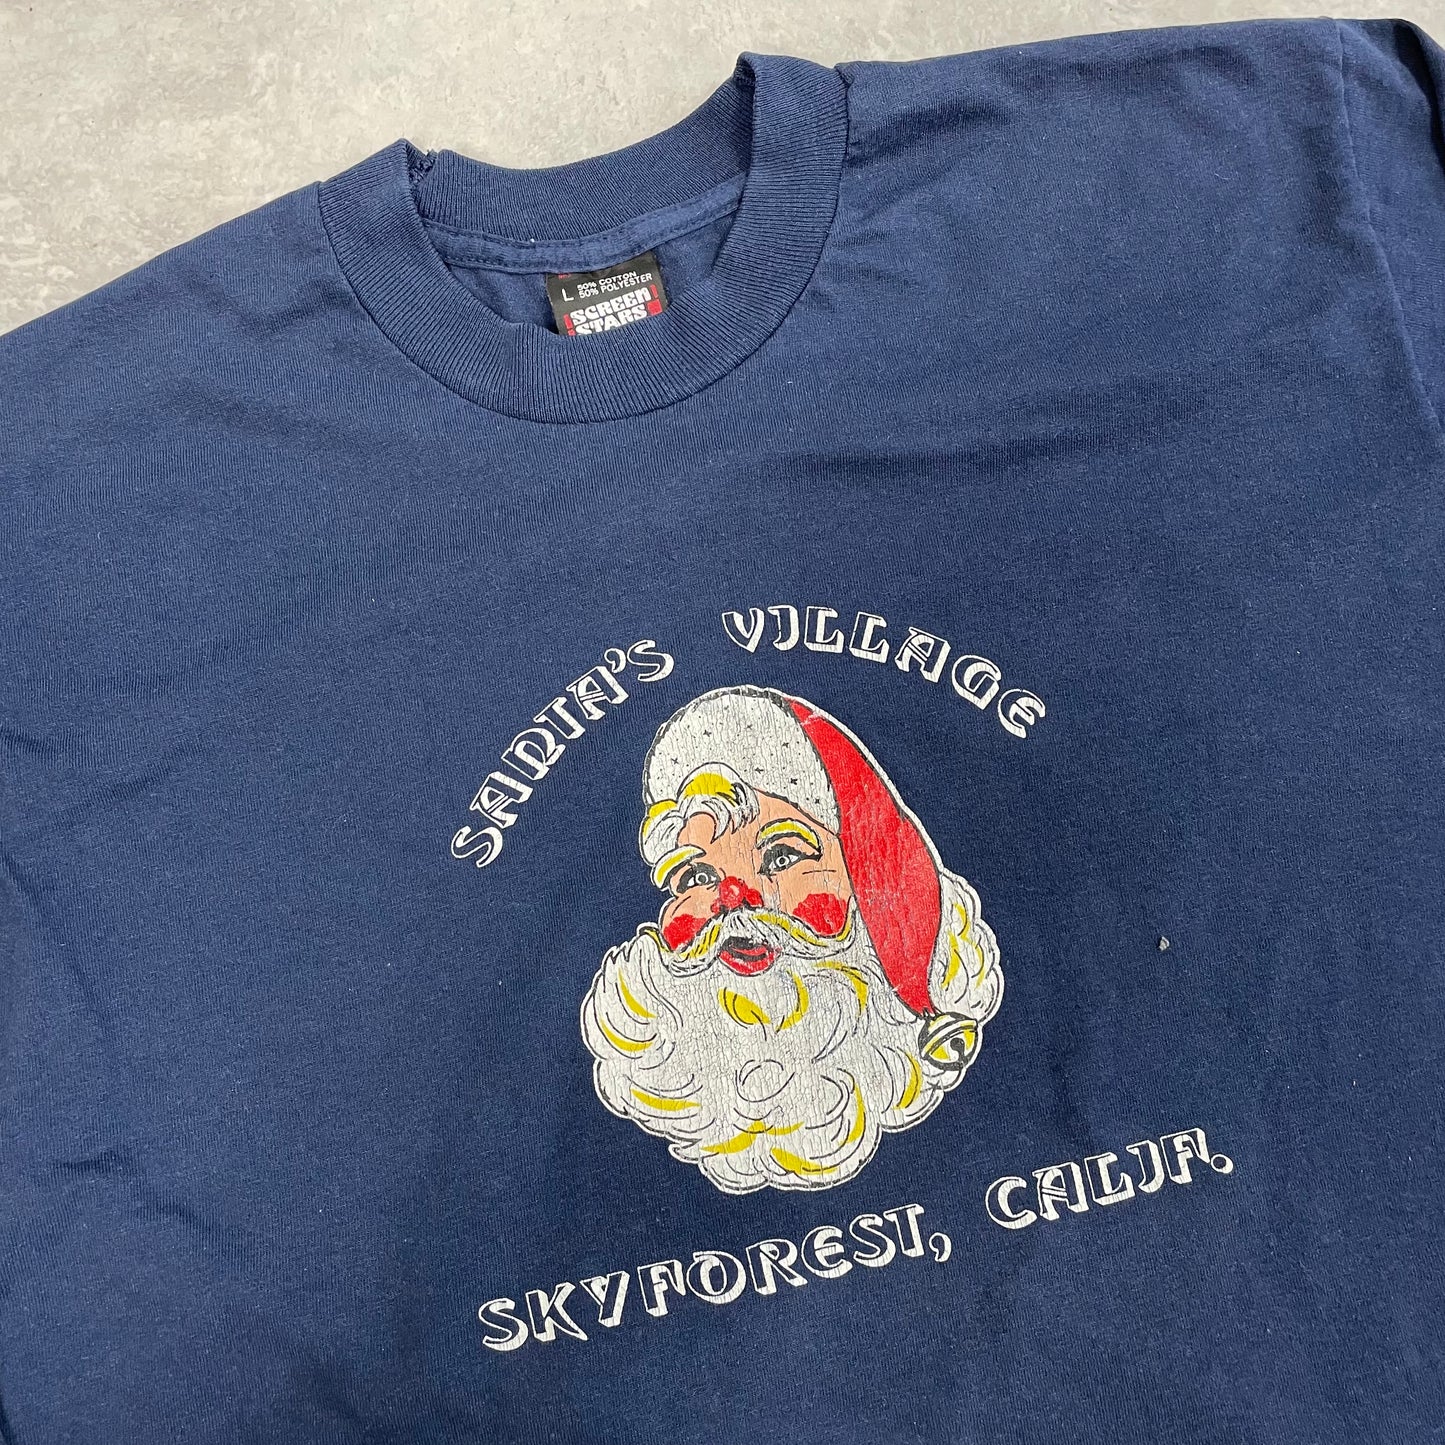 Vintage Single Stitch T-Shirt Screenstars Longsleeve “Santa’s Village Skyforest, Calif.” Made in USA 80’s